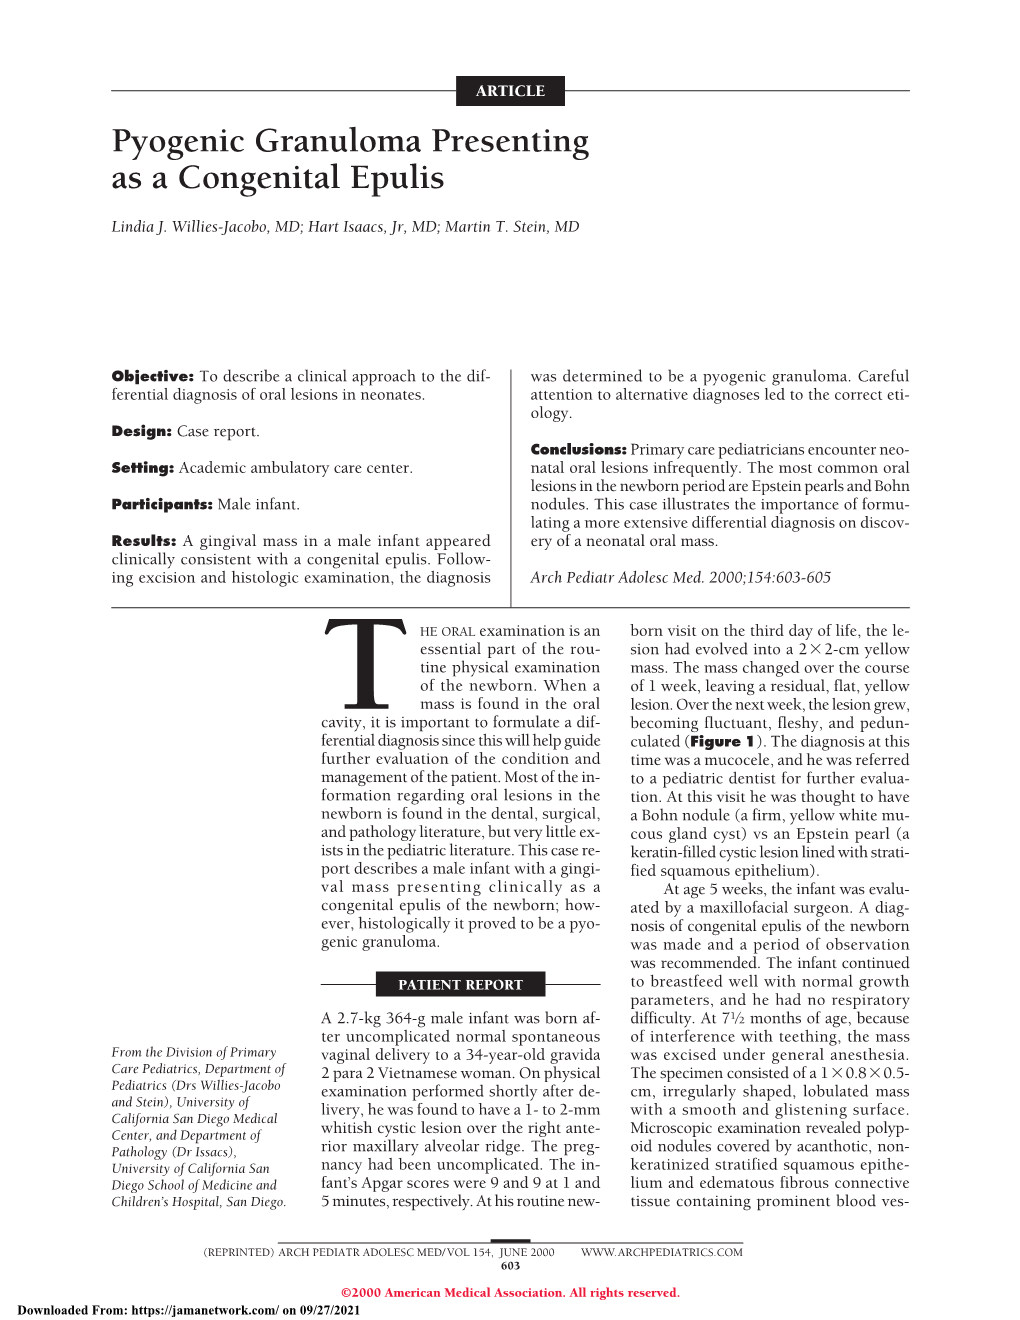 Pyogenic Granuloma Presenting As a Congenital Epulis